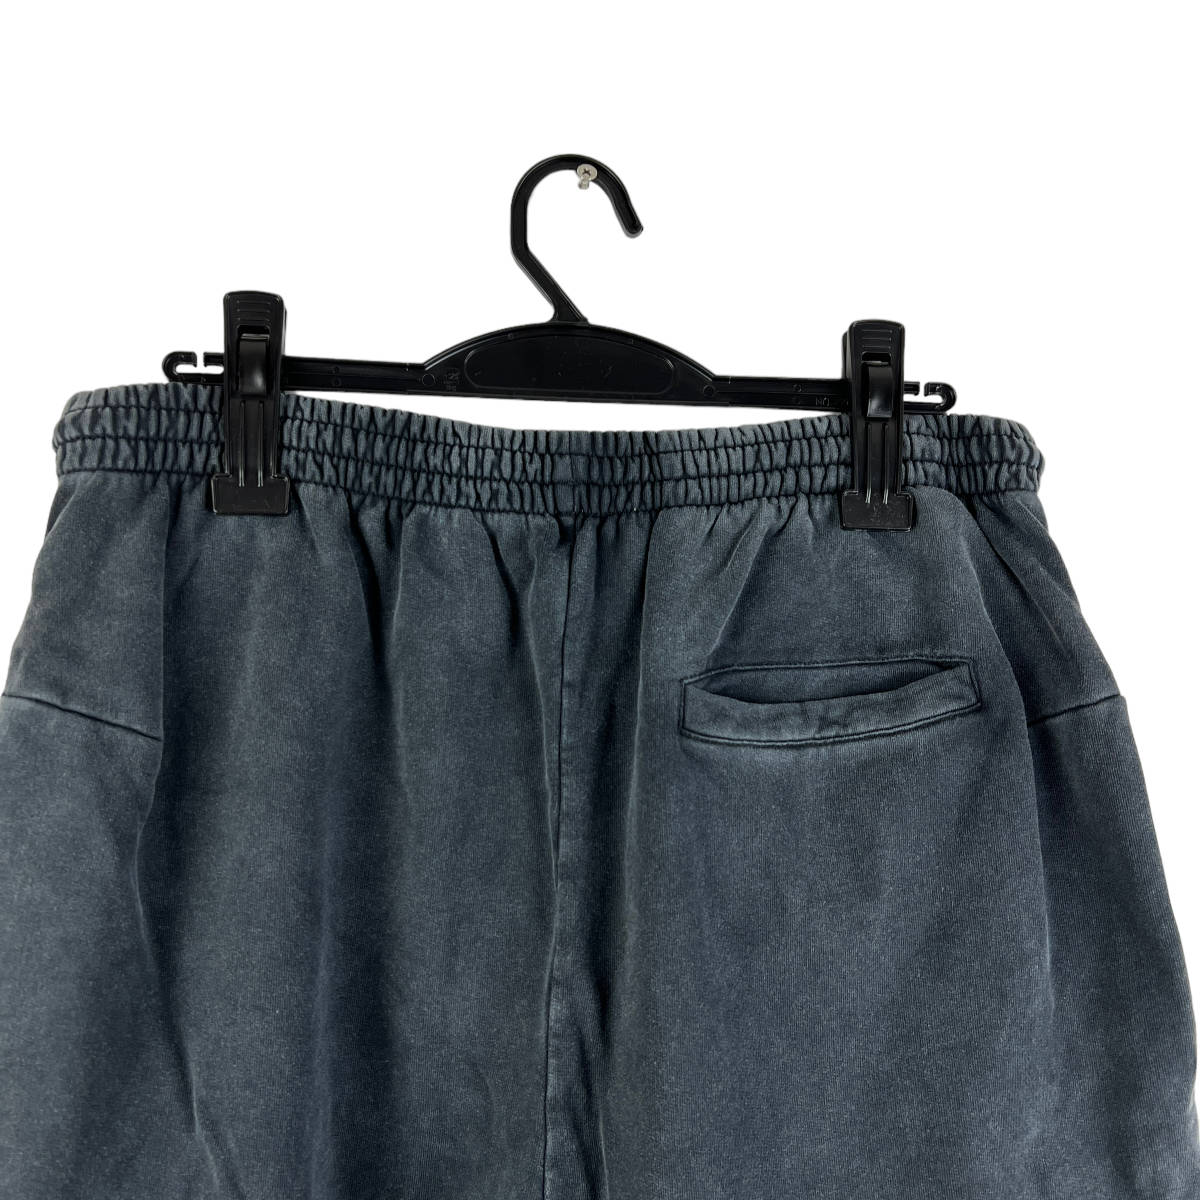 Balenciaga(バレンシアガ) Faded Design Sweat Pants (black)